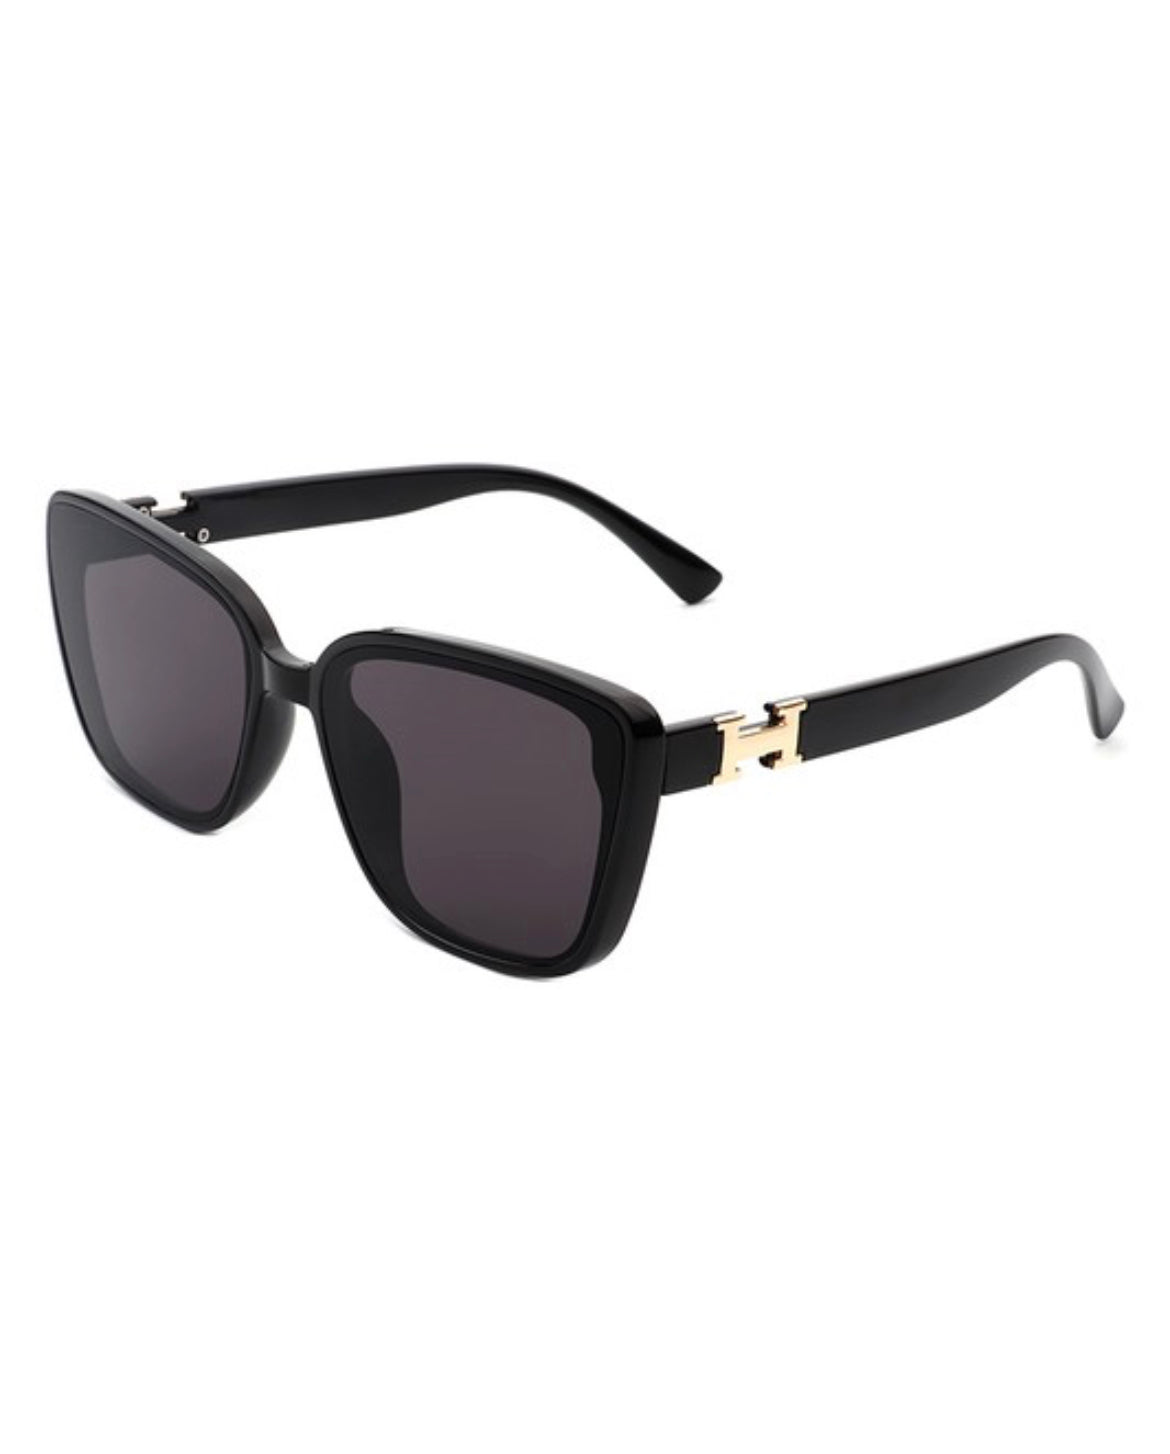 Hot Girl Summer Square Sunglasses